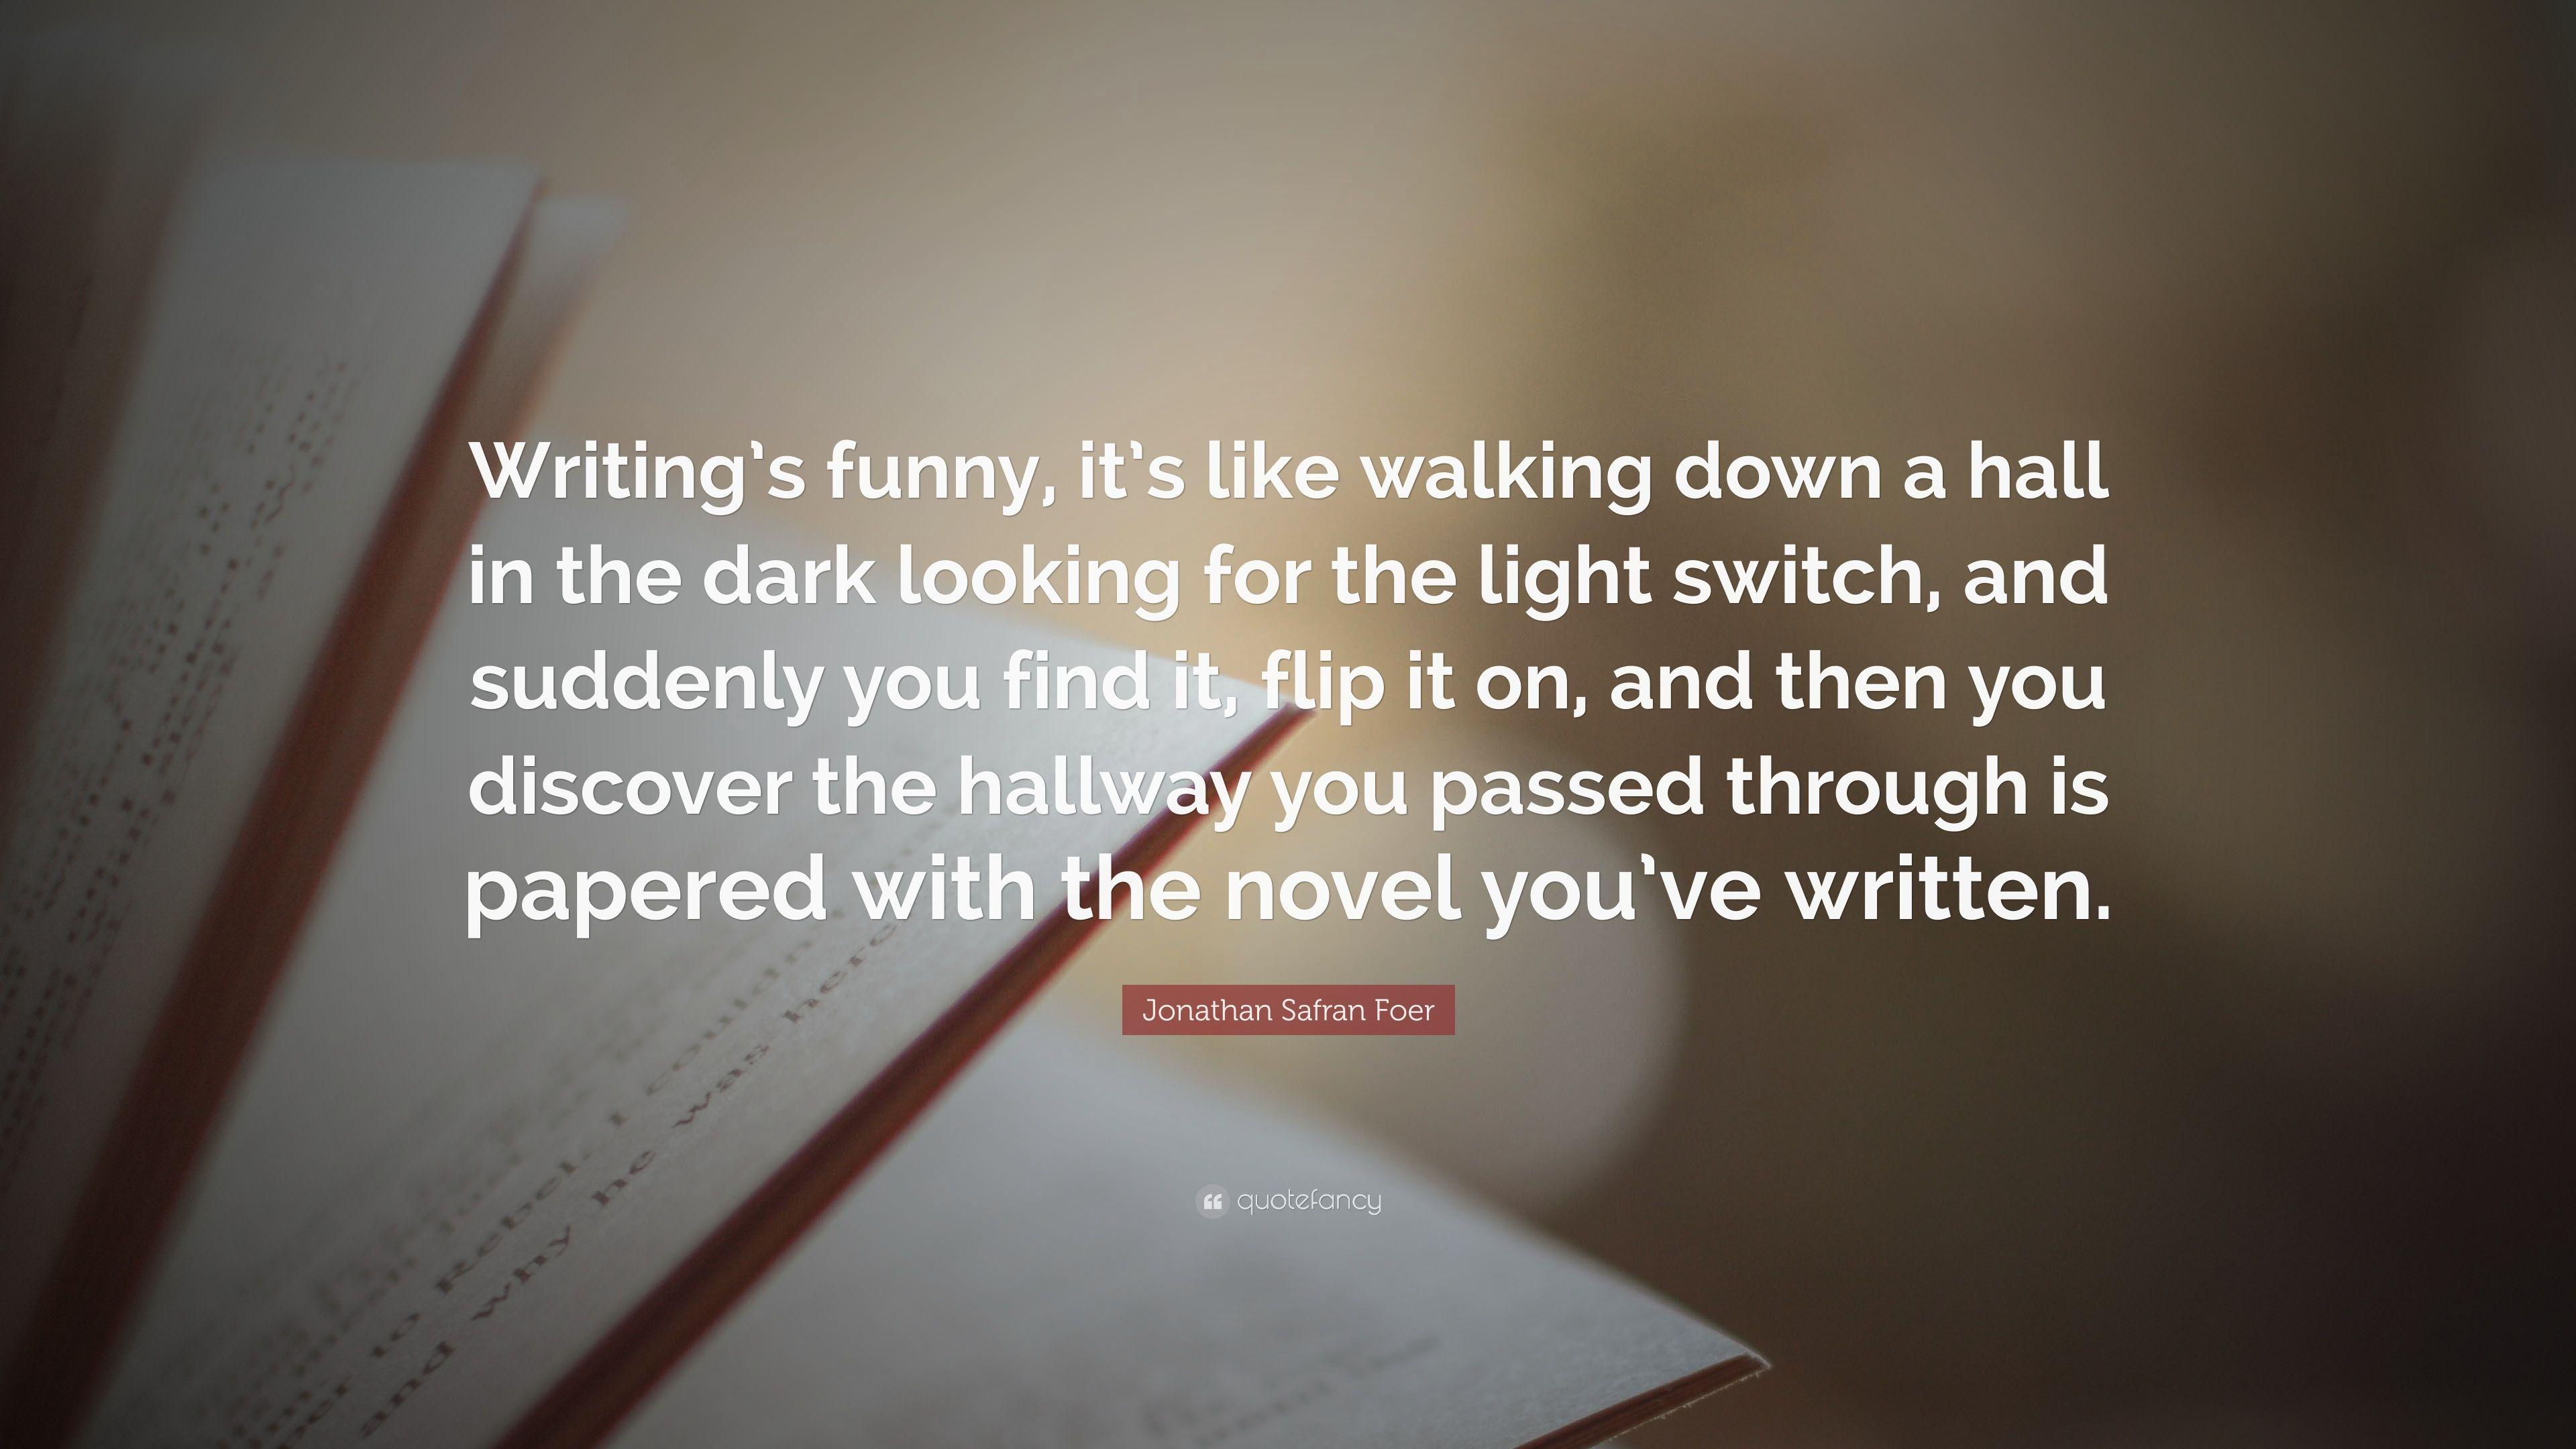 Jonathan Safran Foer Quote: “Writing's funny, it's like walking down